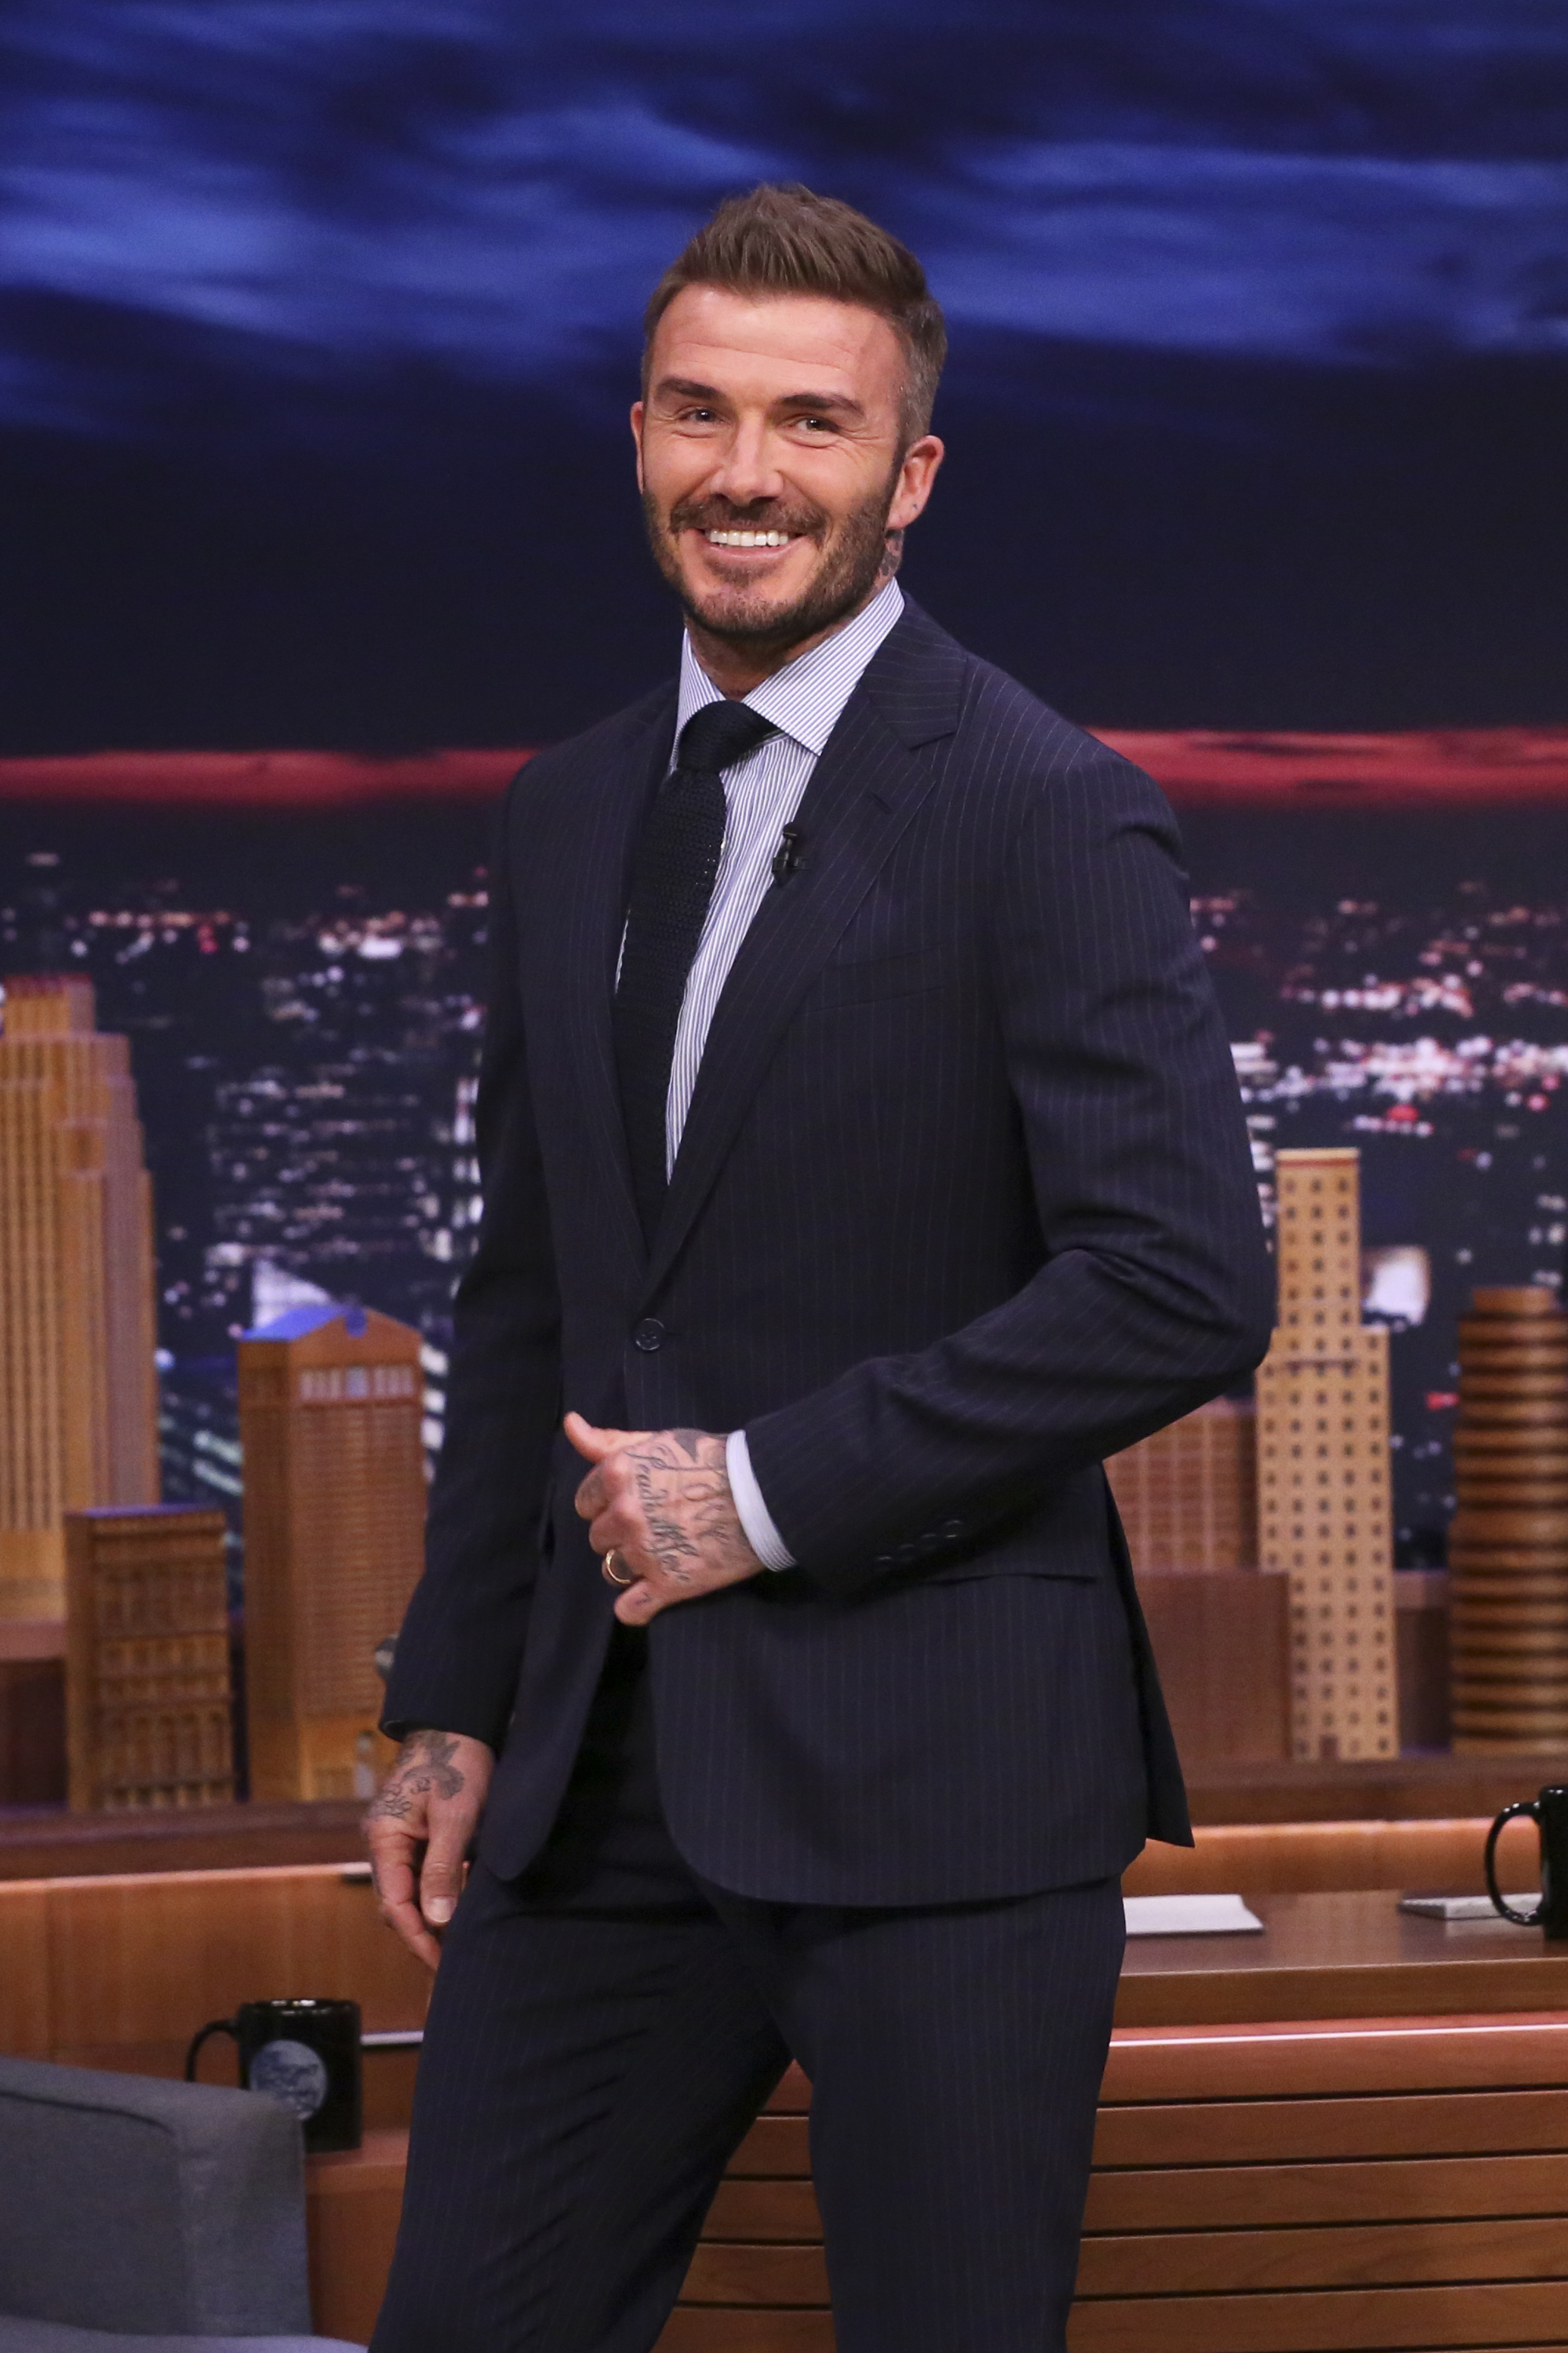 David Beckham au "Tonight Show with Jimmy Fallon" le 26 février 2020 | Source : Getty Images